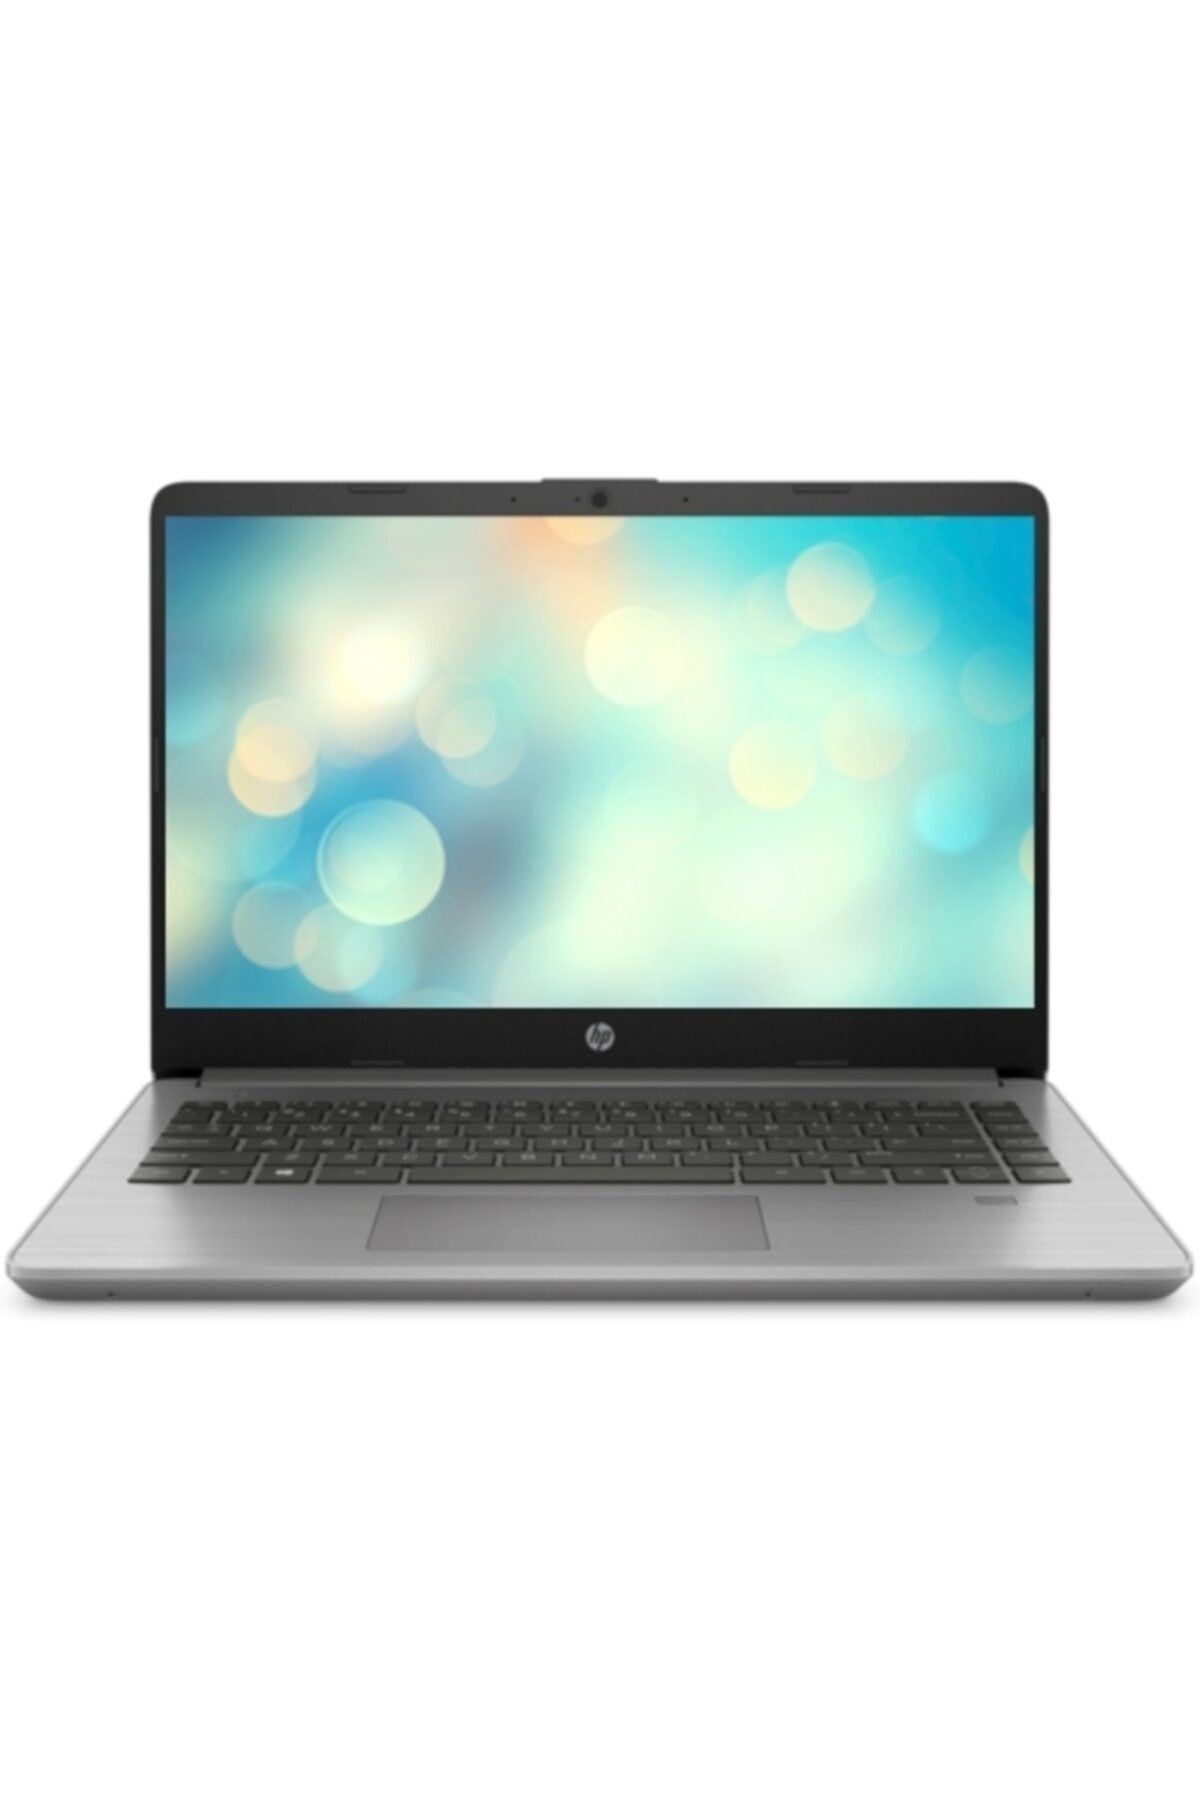 HP Gümüş 9hr35es 340s G7 I3-1005g1 4gb 128gb 14 Dos Laptop